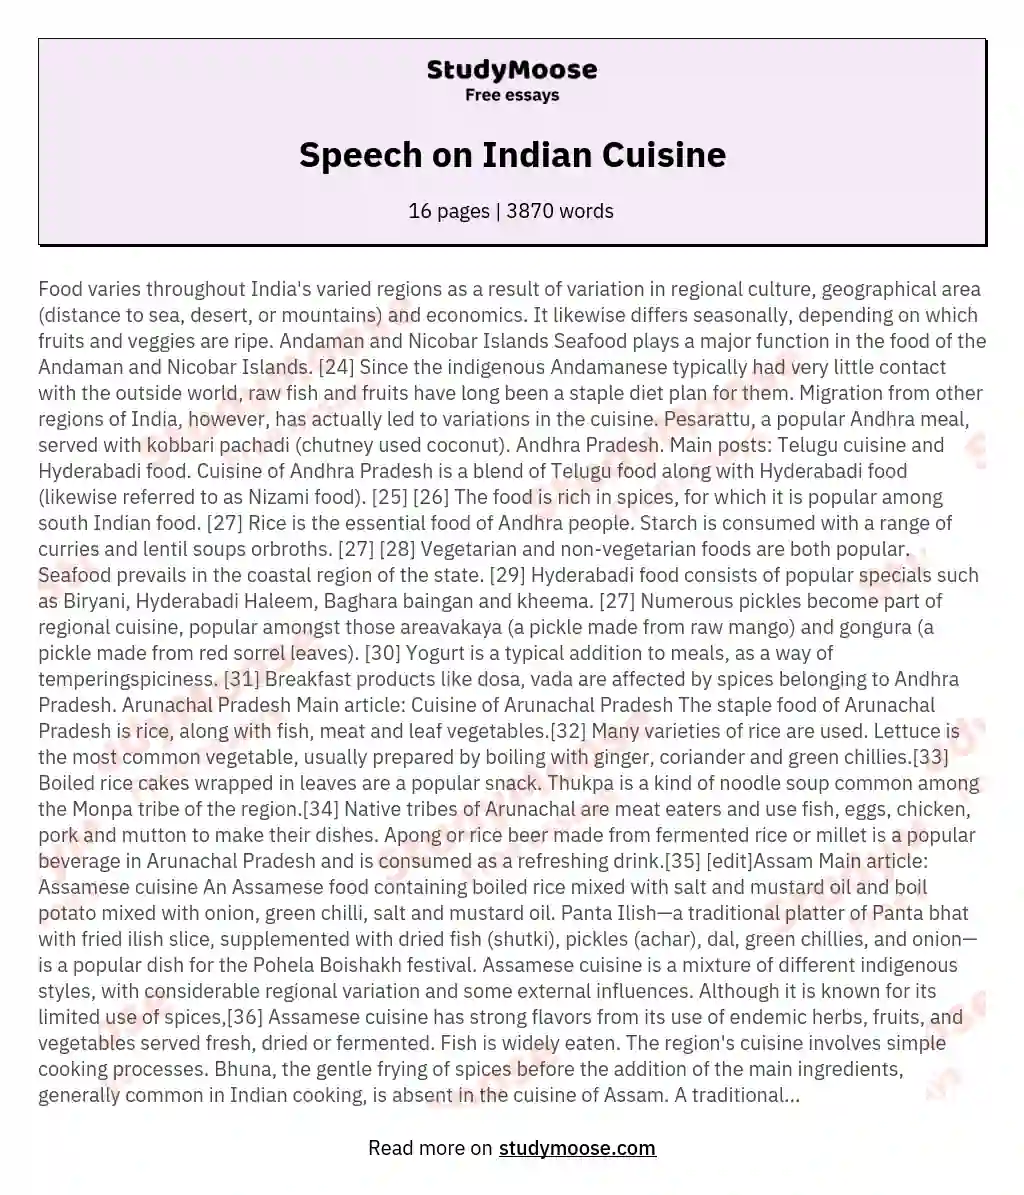 Speech on Indian Cuisine essay